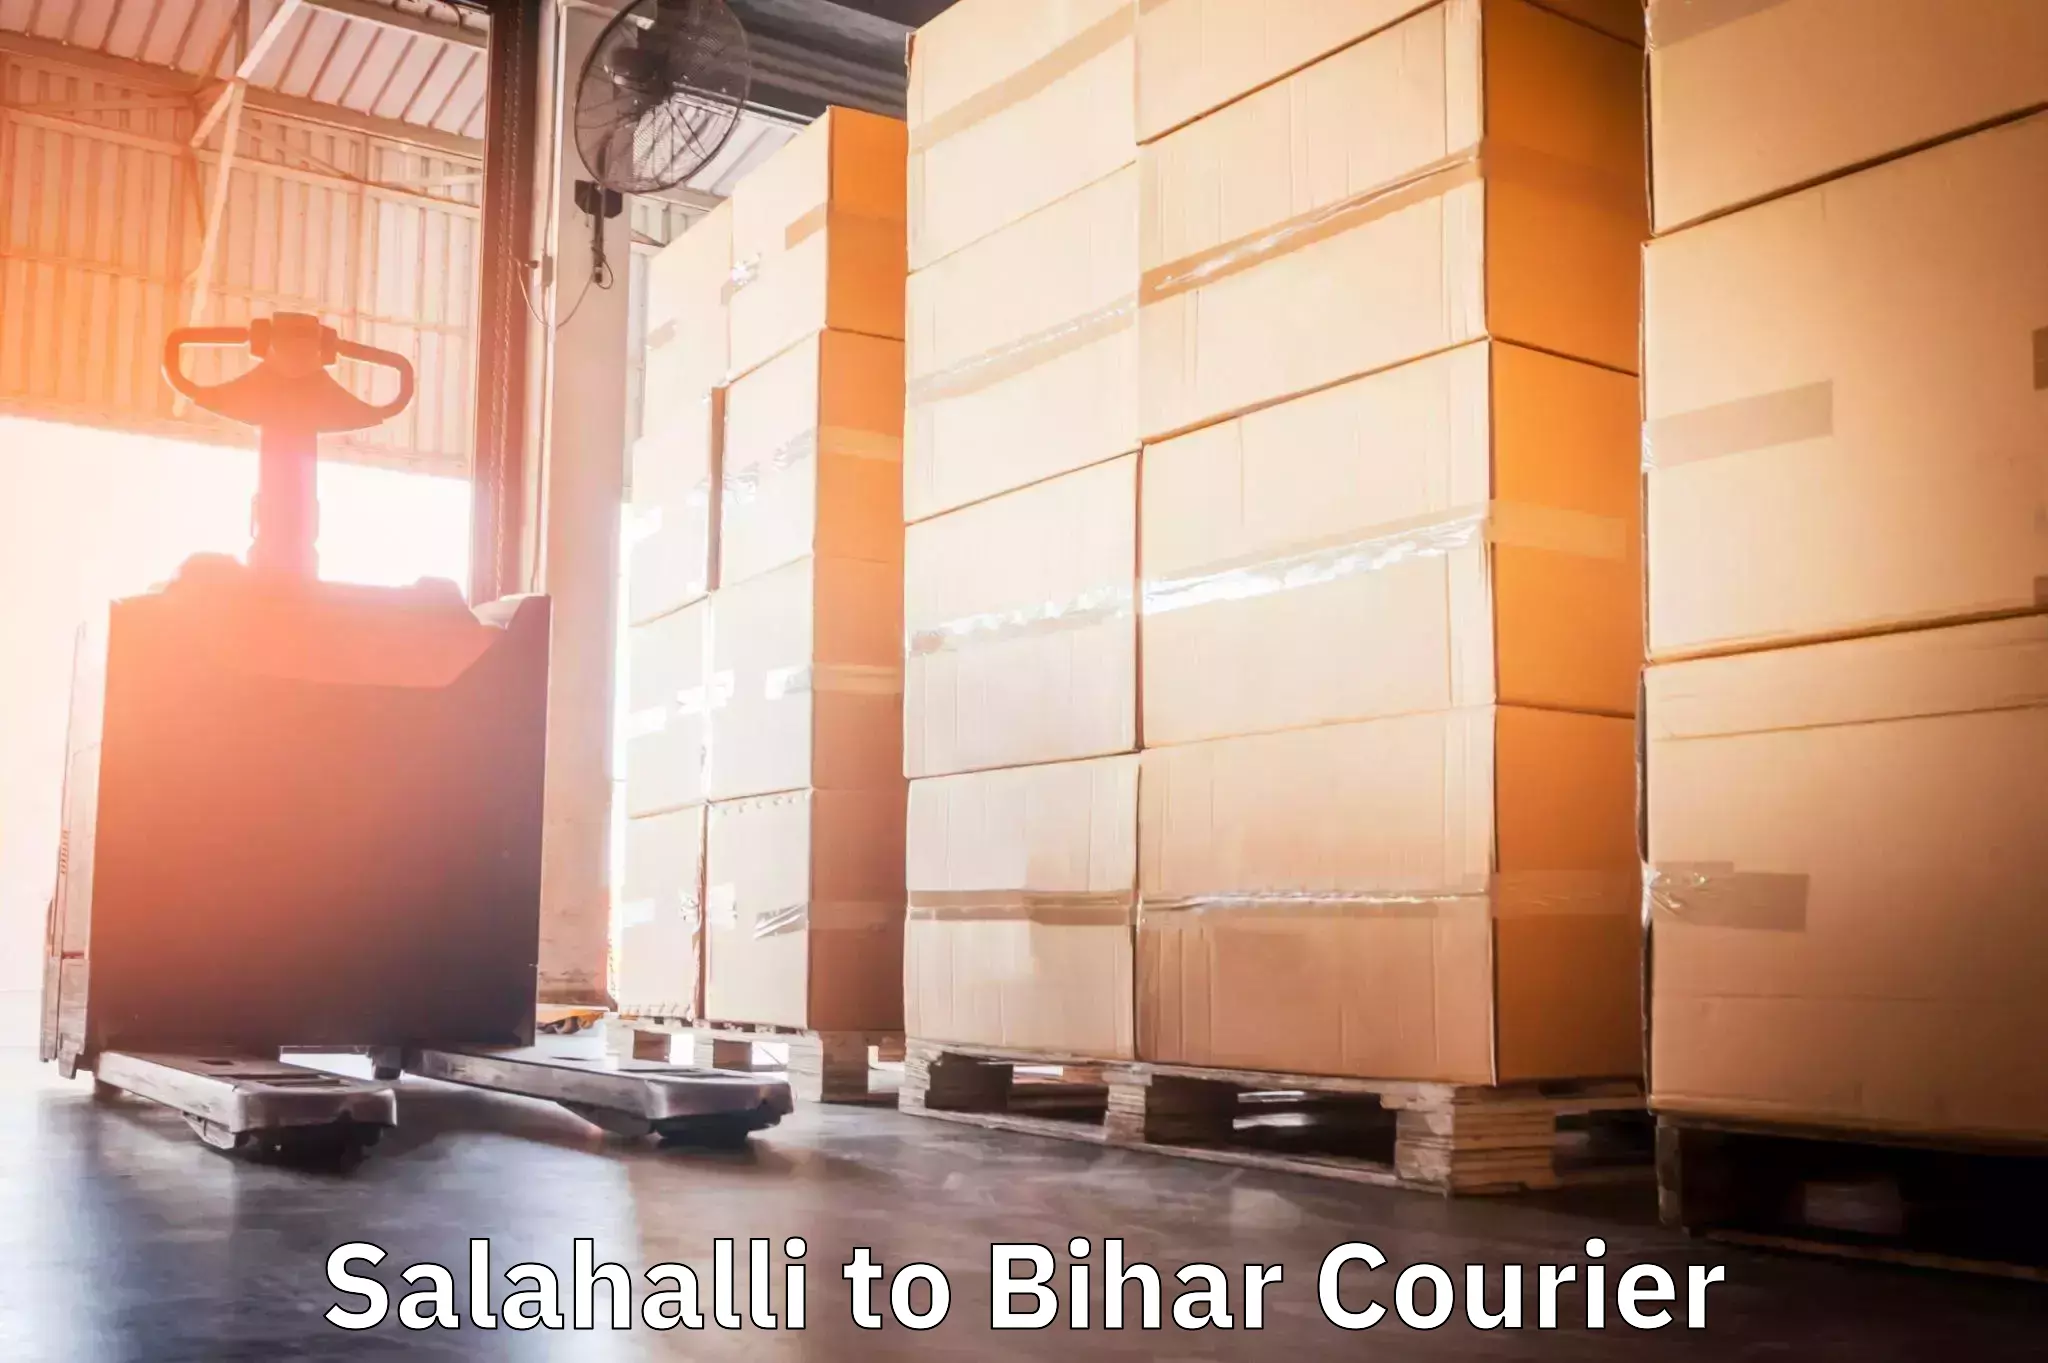 High-speed parcel service Salahalli to Bihar